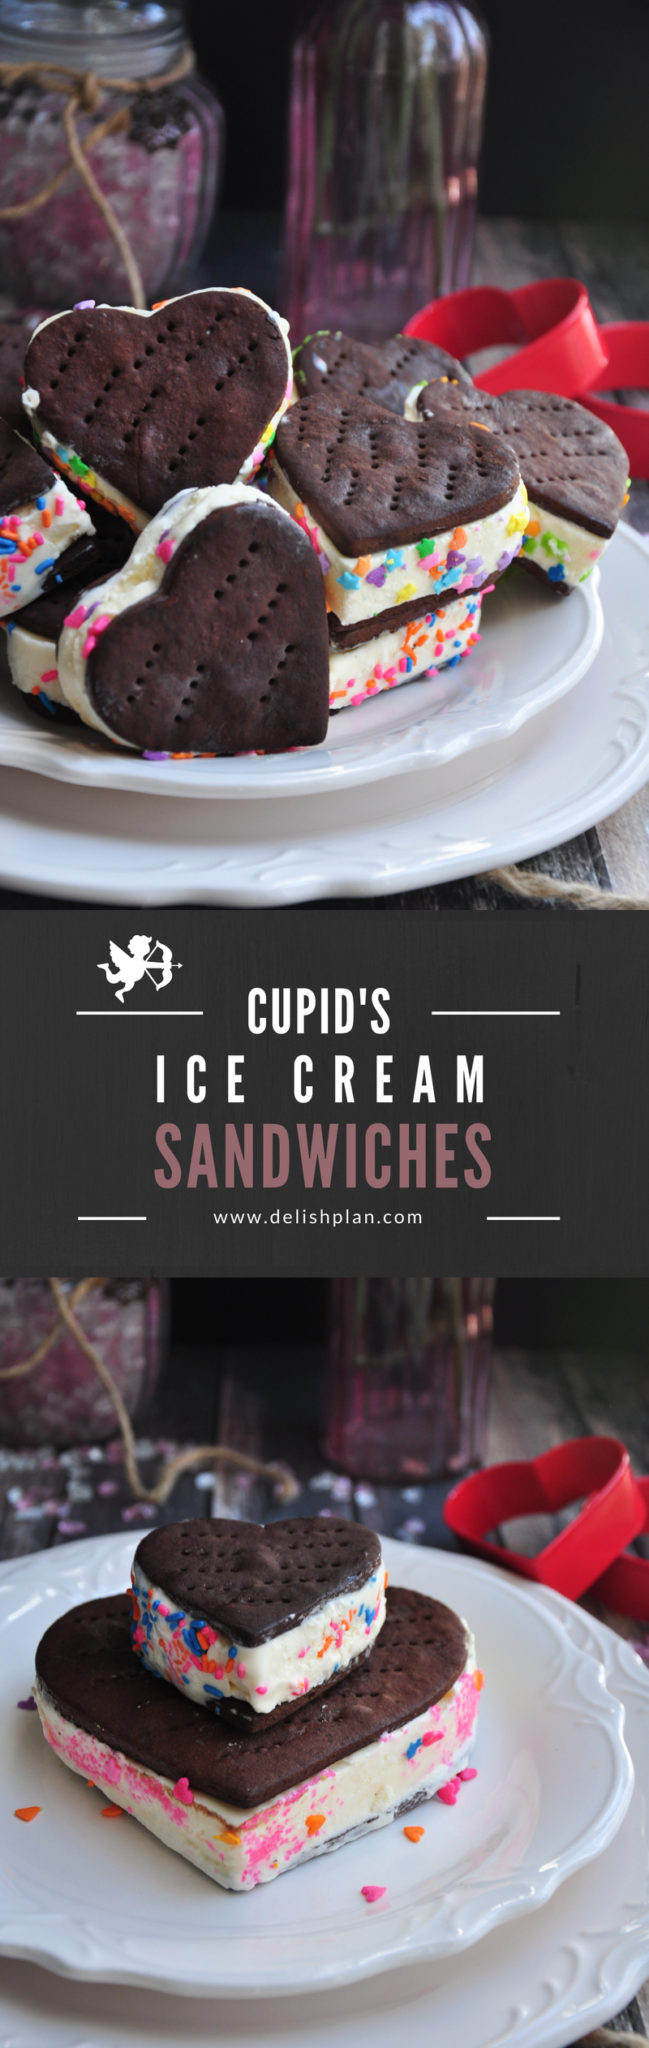 Cupid's Ice Cream Sandwiches